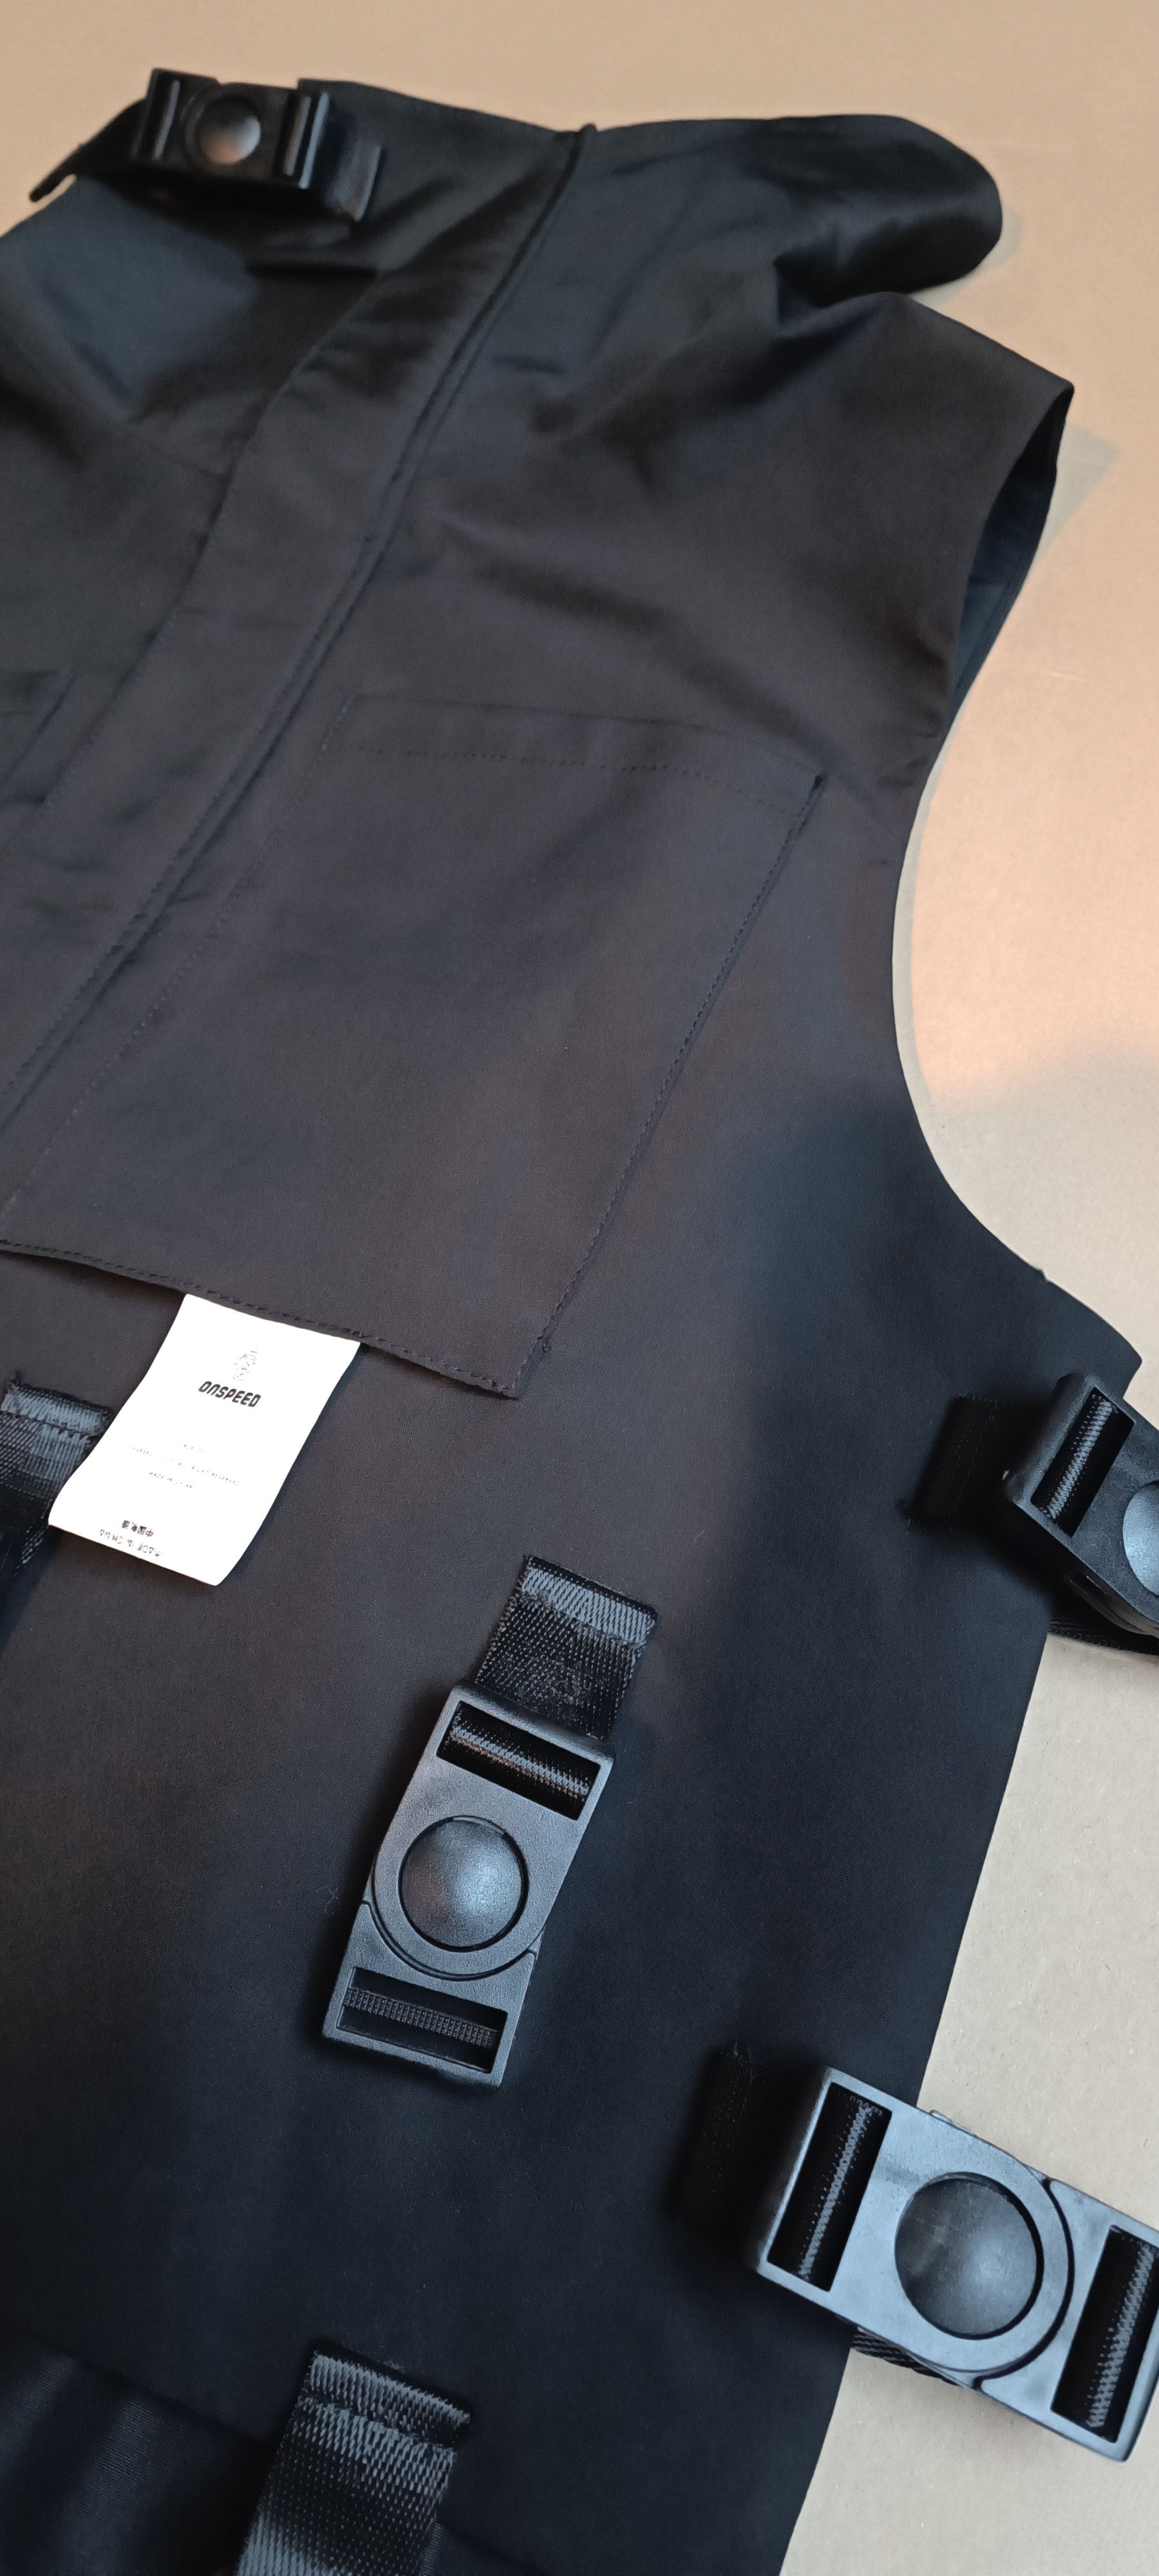 Avant Garde - Avant-Garde Adjustable Tactical Vest by ONSPEED - 6